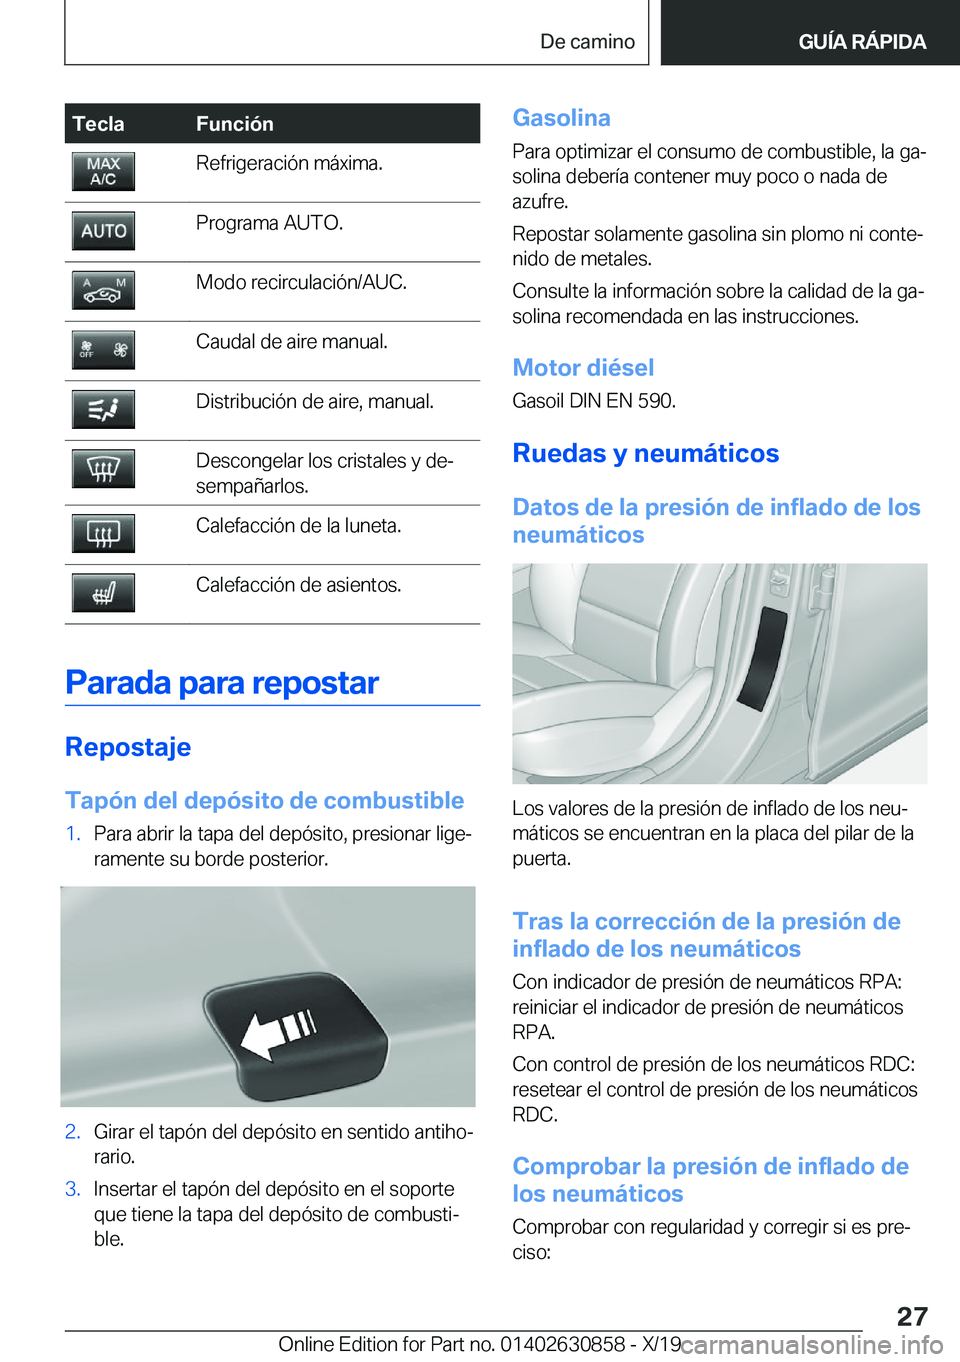 BMW 4 SERIES GRAN COUPE 2020  Manuales de Empleo (in Spanish) �T�e�c�l�a�F�u�n�c�i�